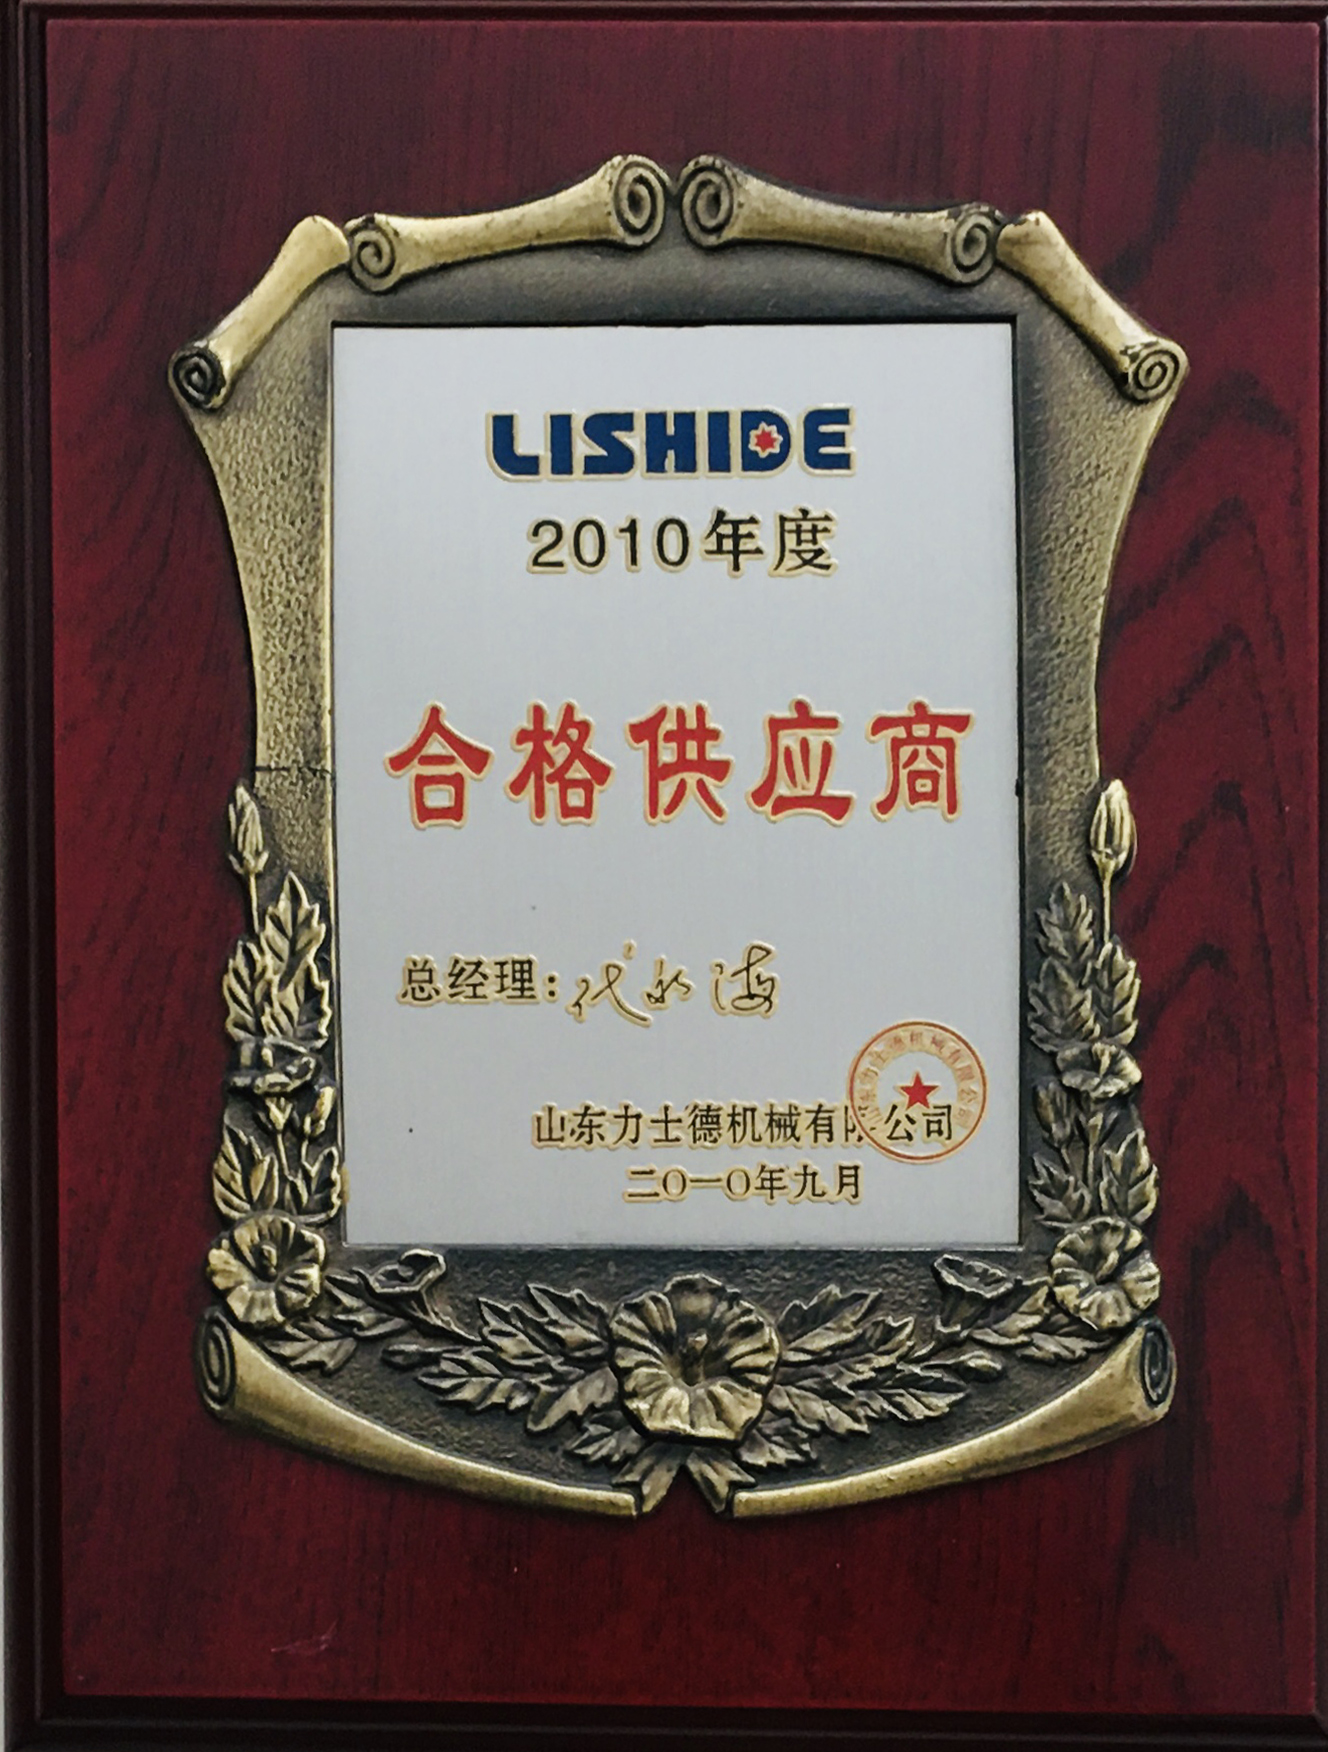 Lishide Qualified Supplier